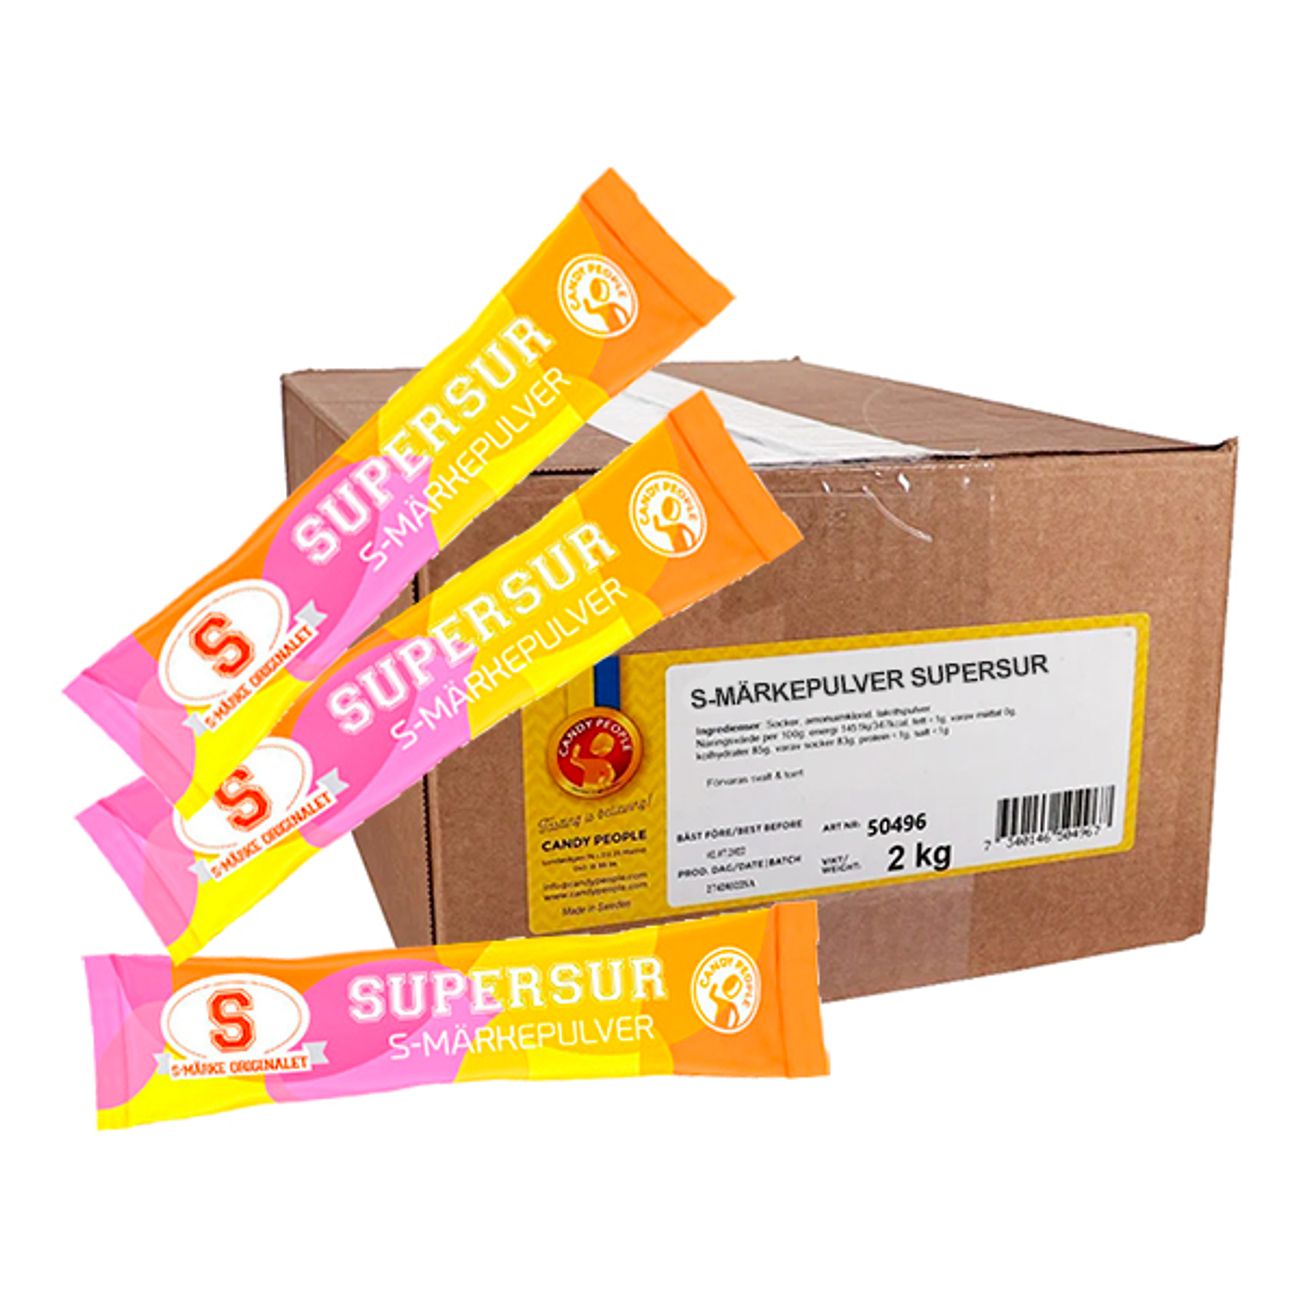 s-markepulver-supersur-storpack-77660-1